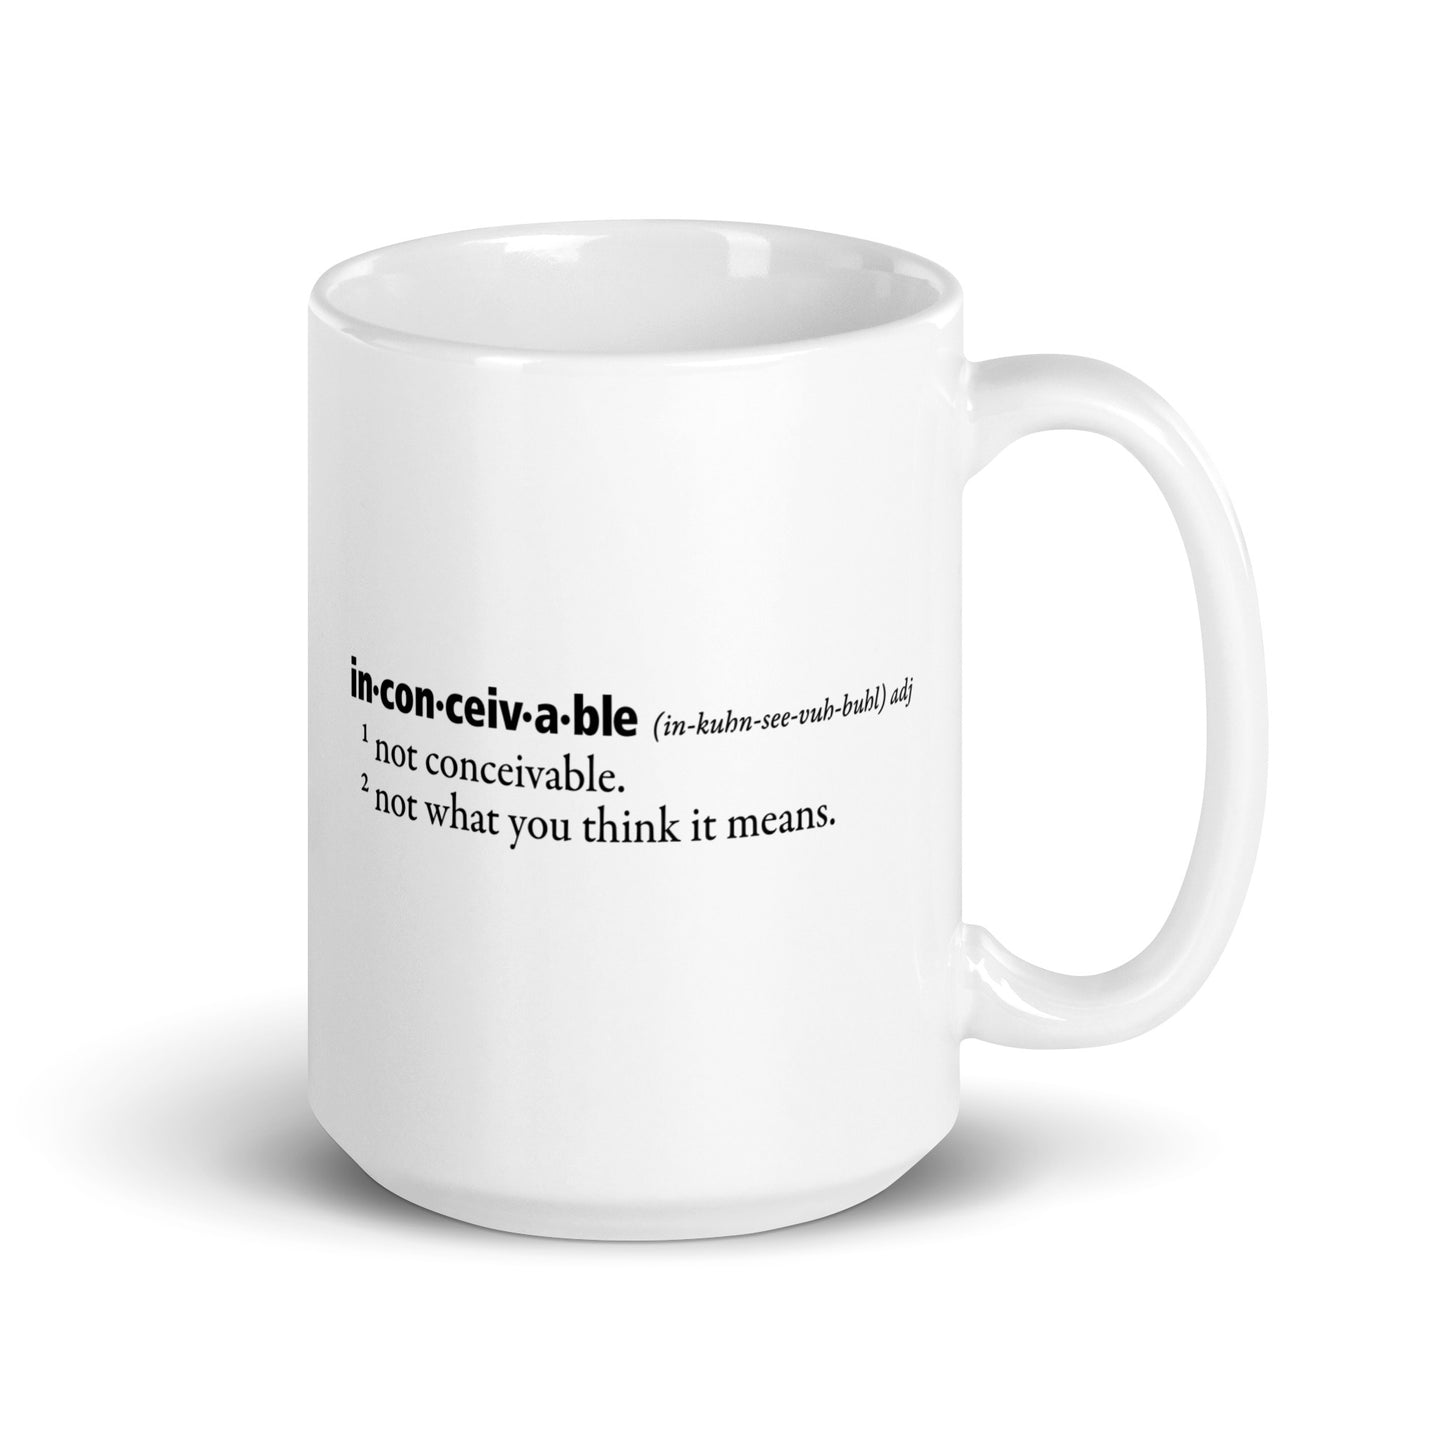 Inconceivable Definition Mug